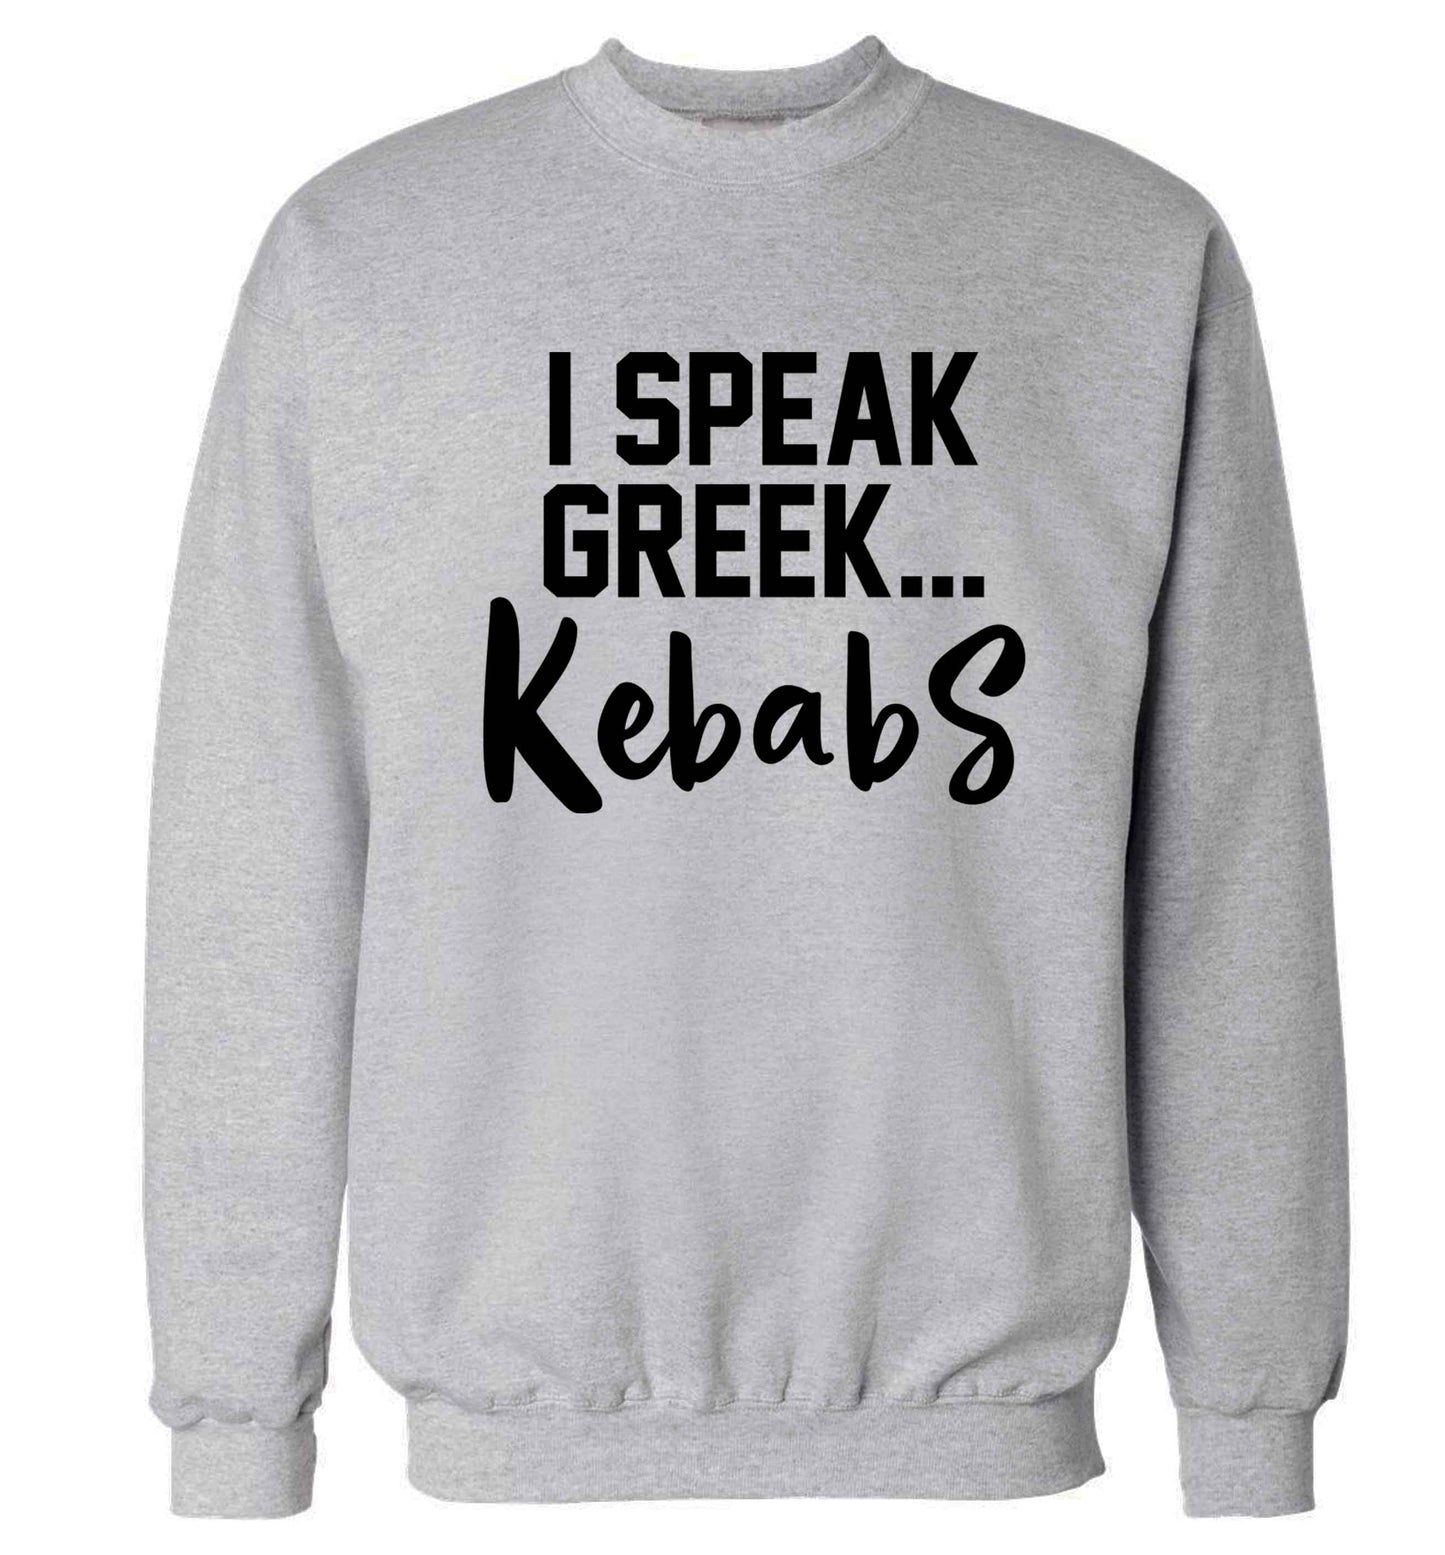 I speak Greek...kebabs Adult's unisex grey Sweater 2XL